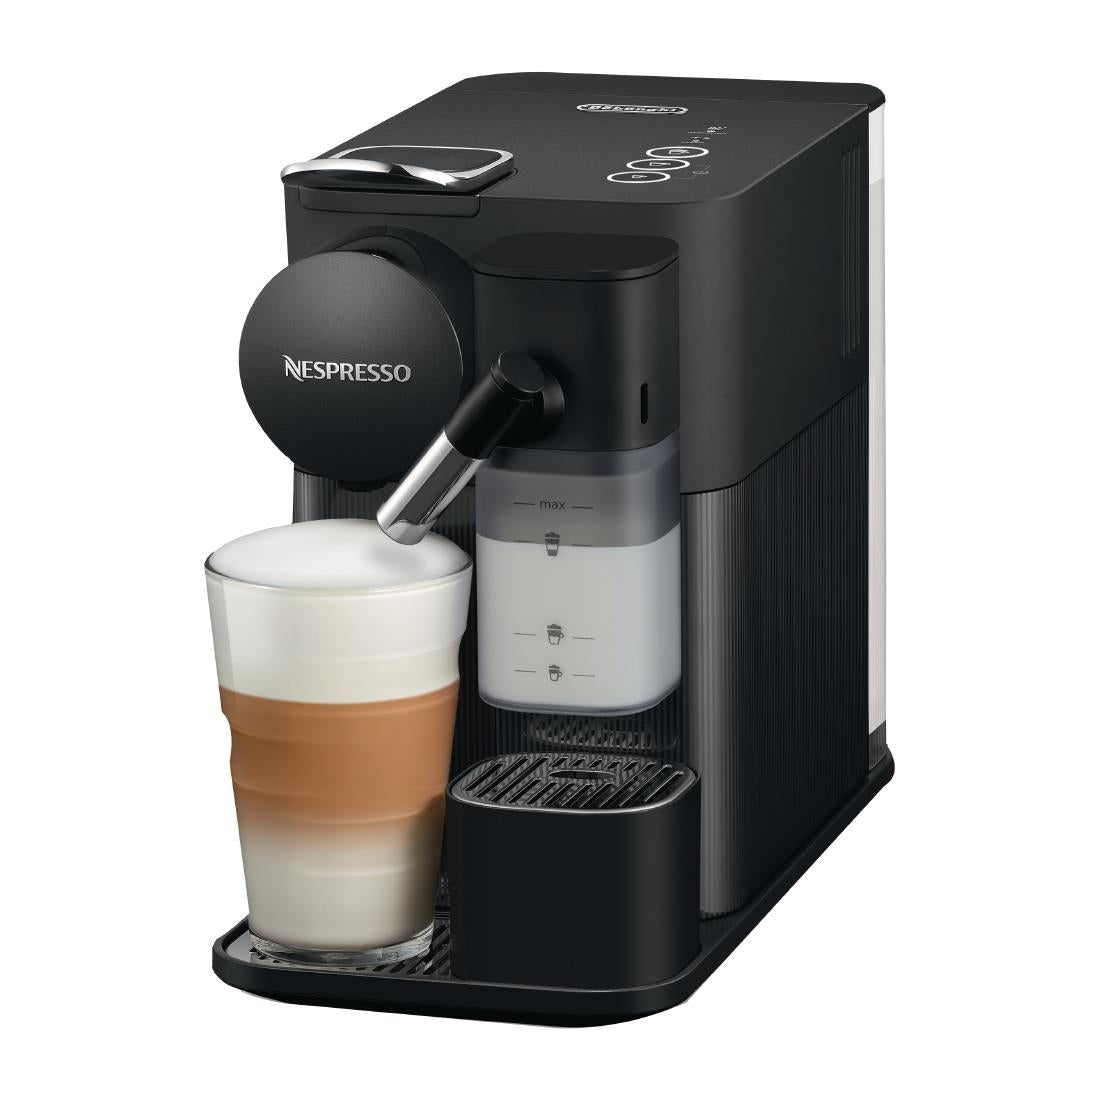 FT896 DeLonghi Nespresso Lattissima One Coffee Machine Black JD Catering Equipment Solutions Ltd